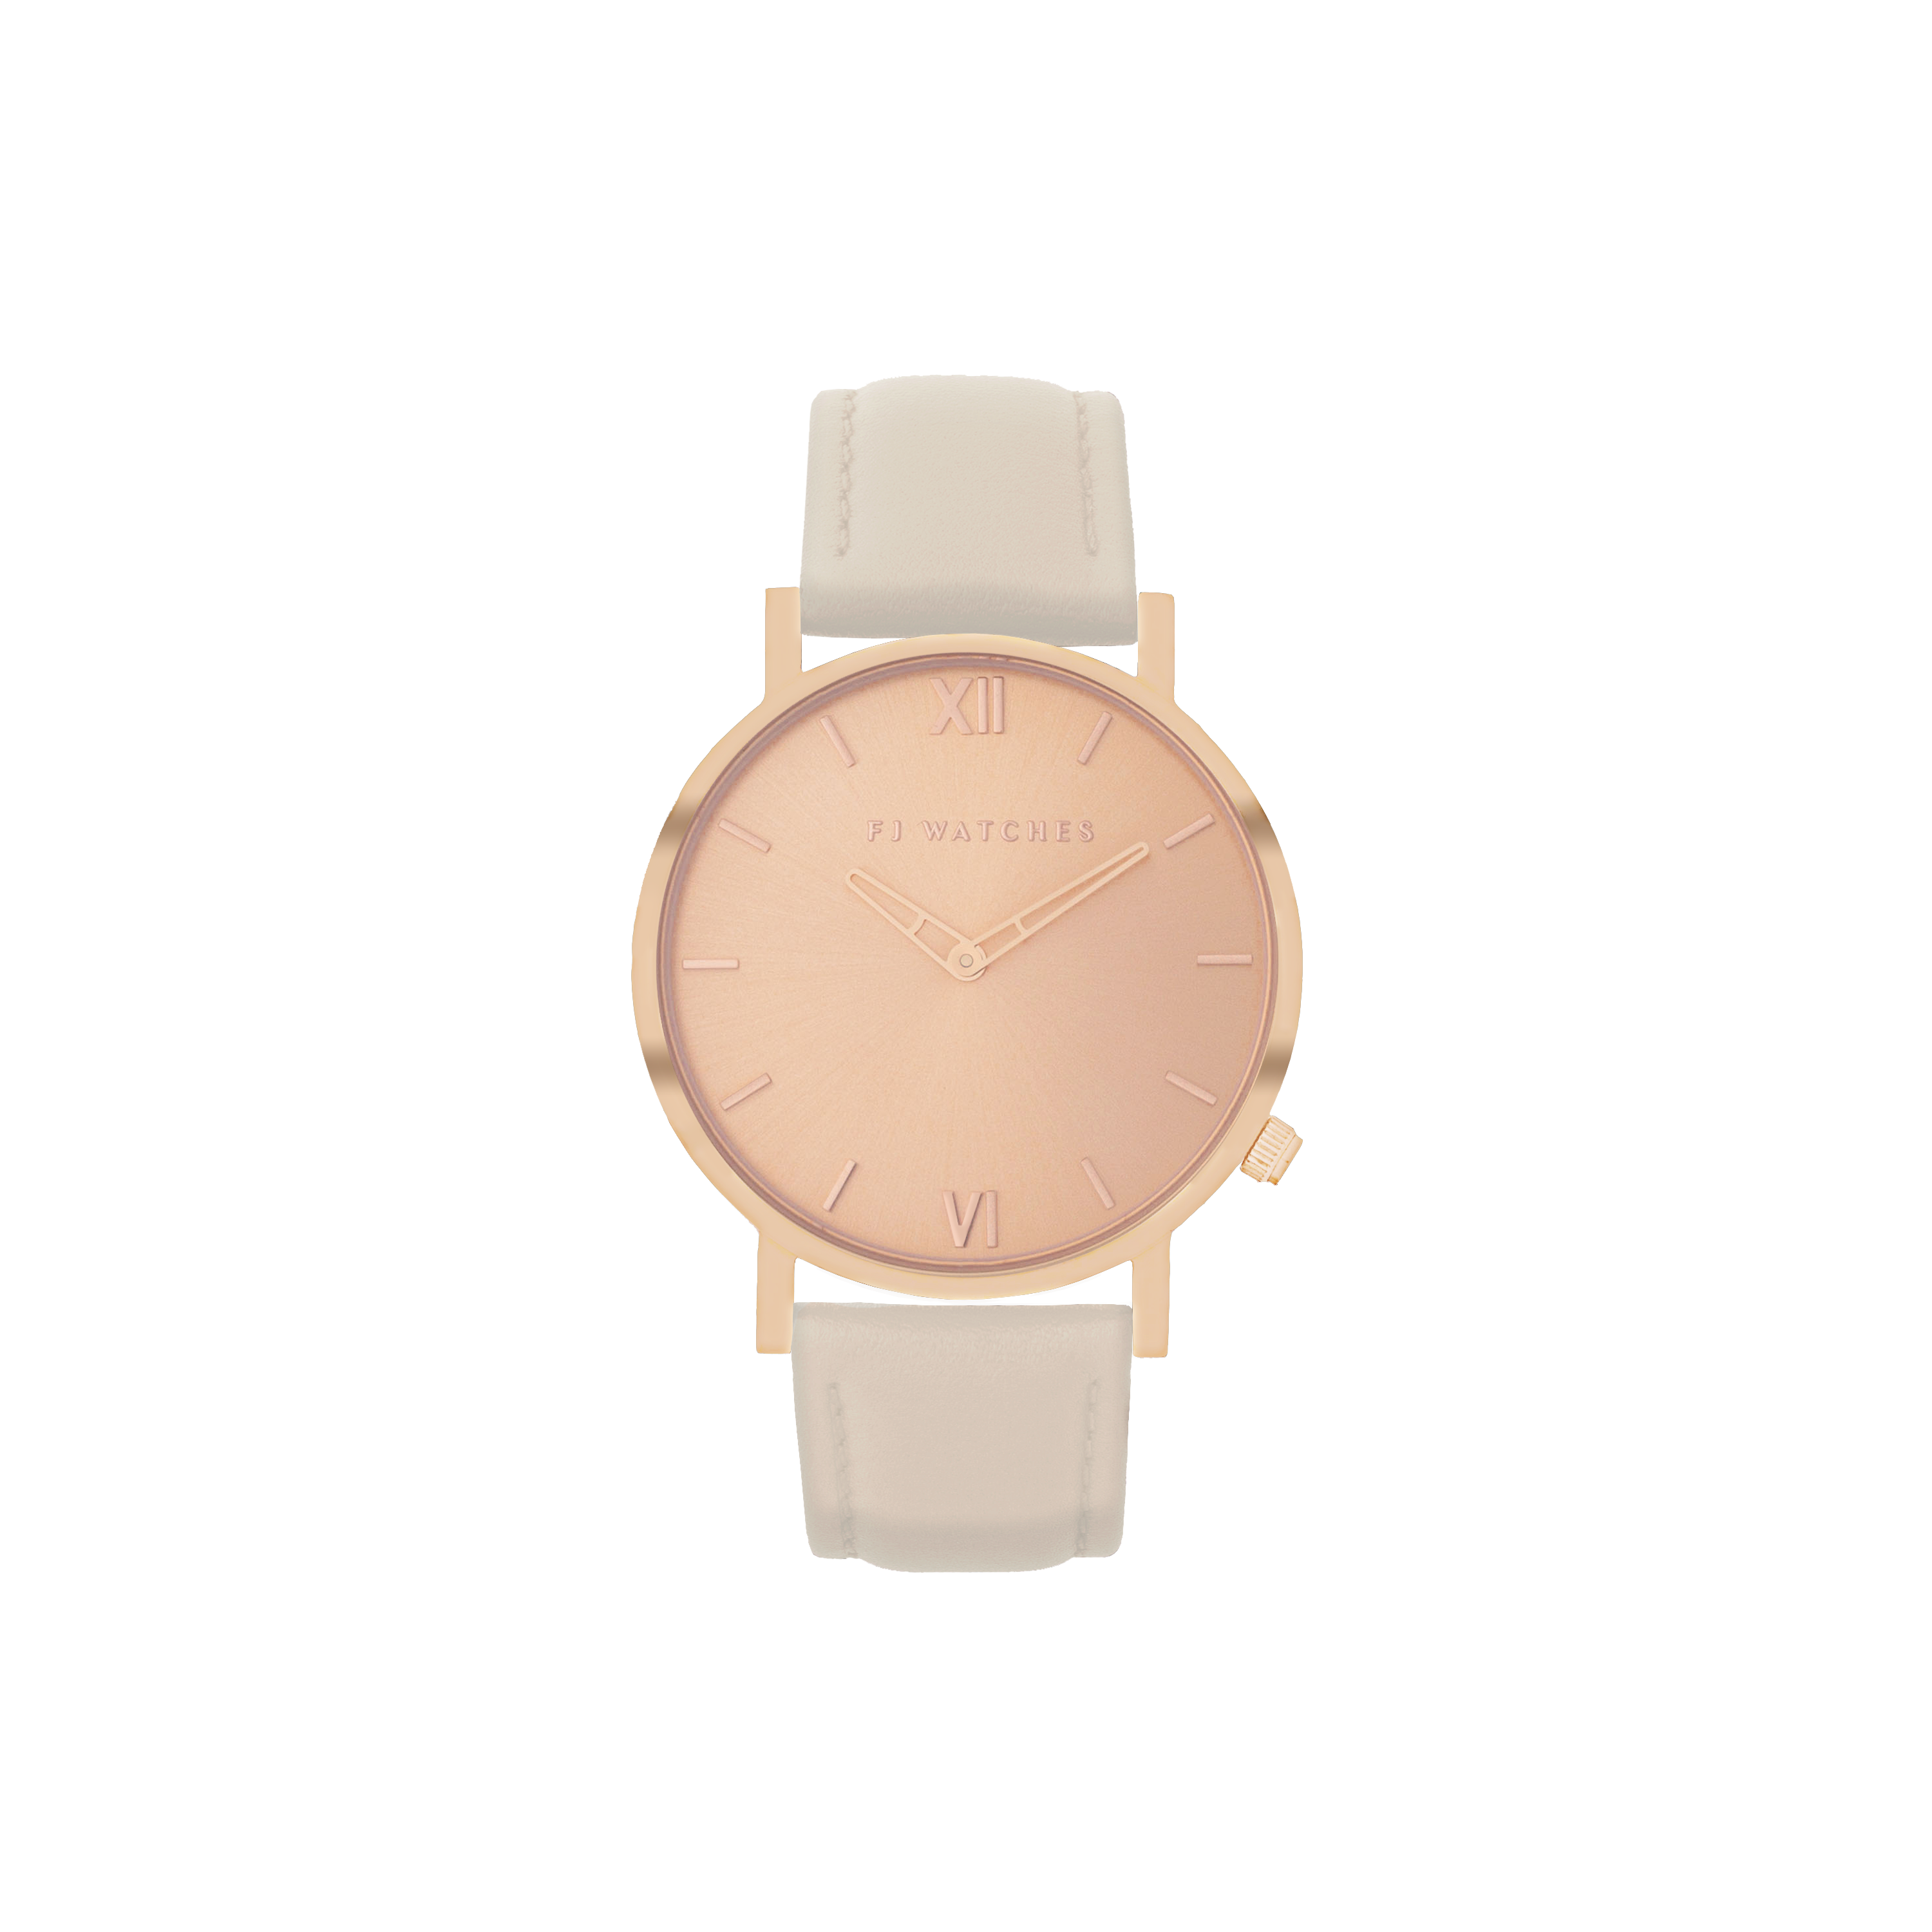 FJ Watches sunset rose gold rosegold watch women 36mm pinky beige leather minimalist